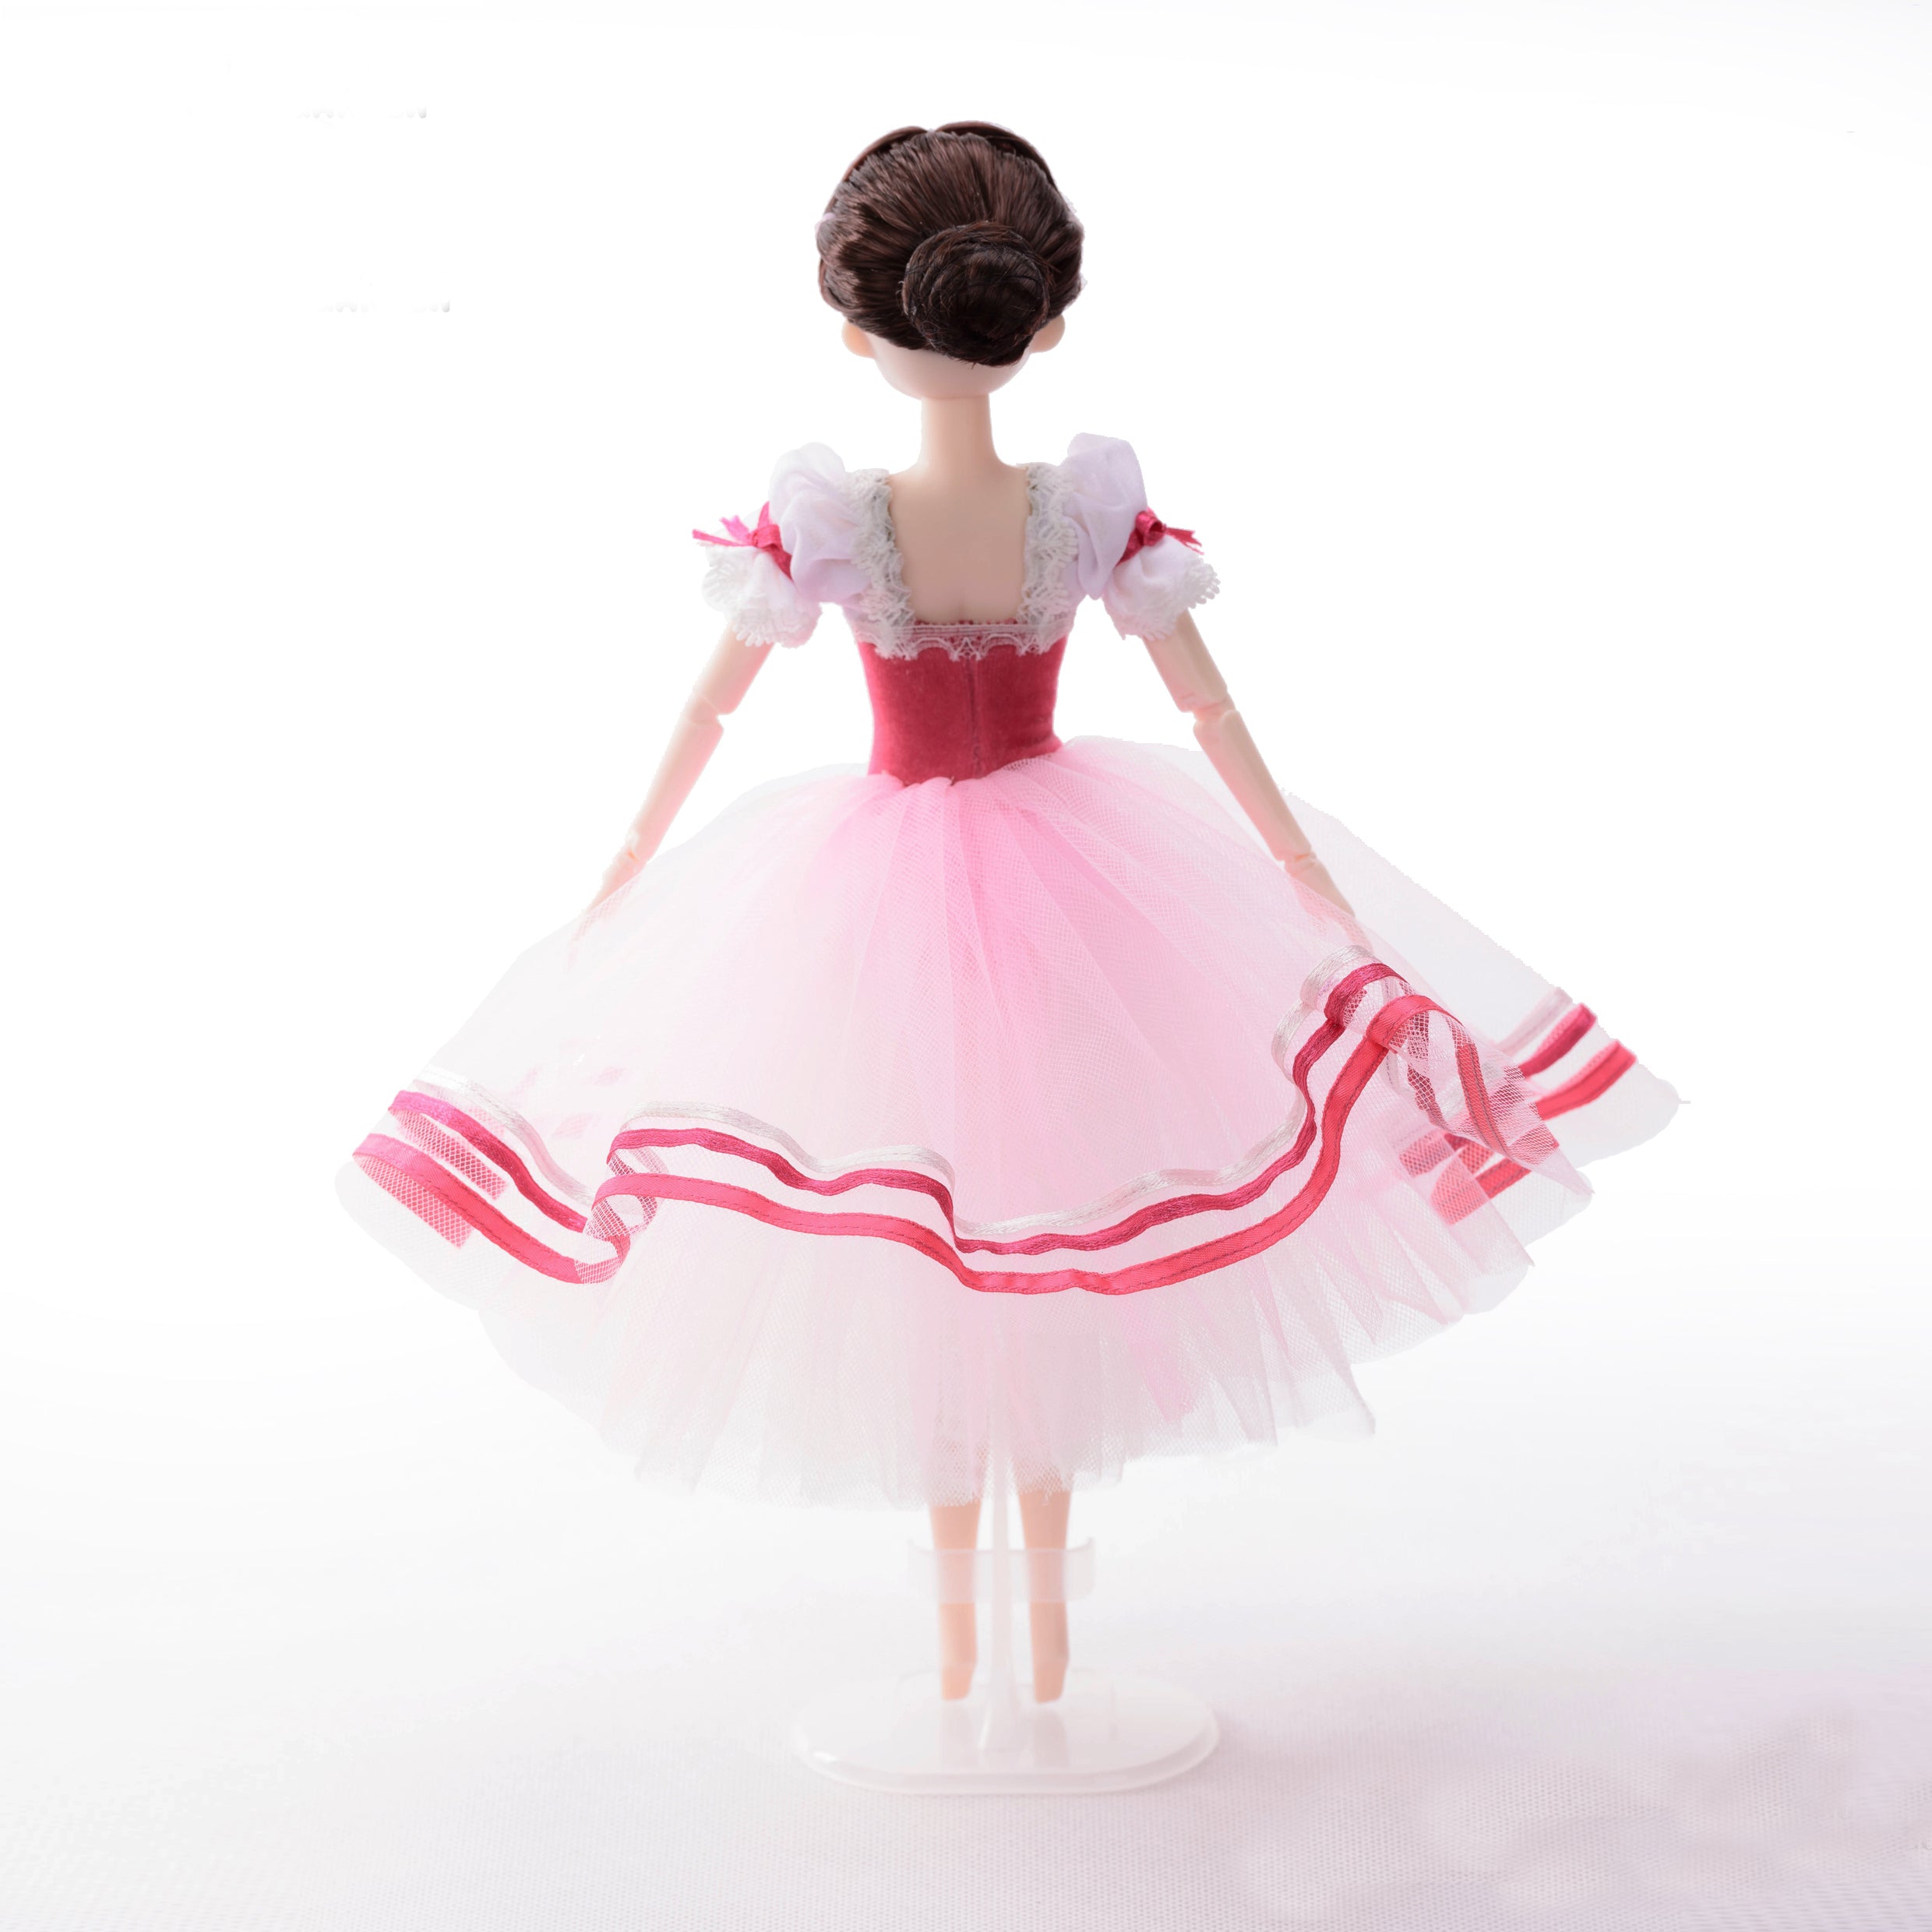 Ballerina Doll "Lise" - Dancewear by Patricia